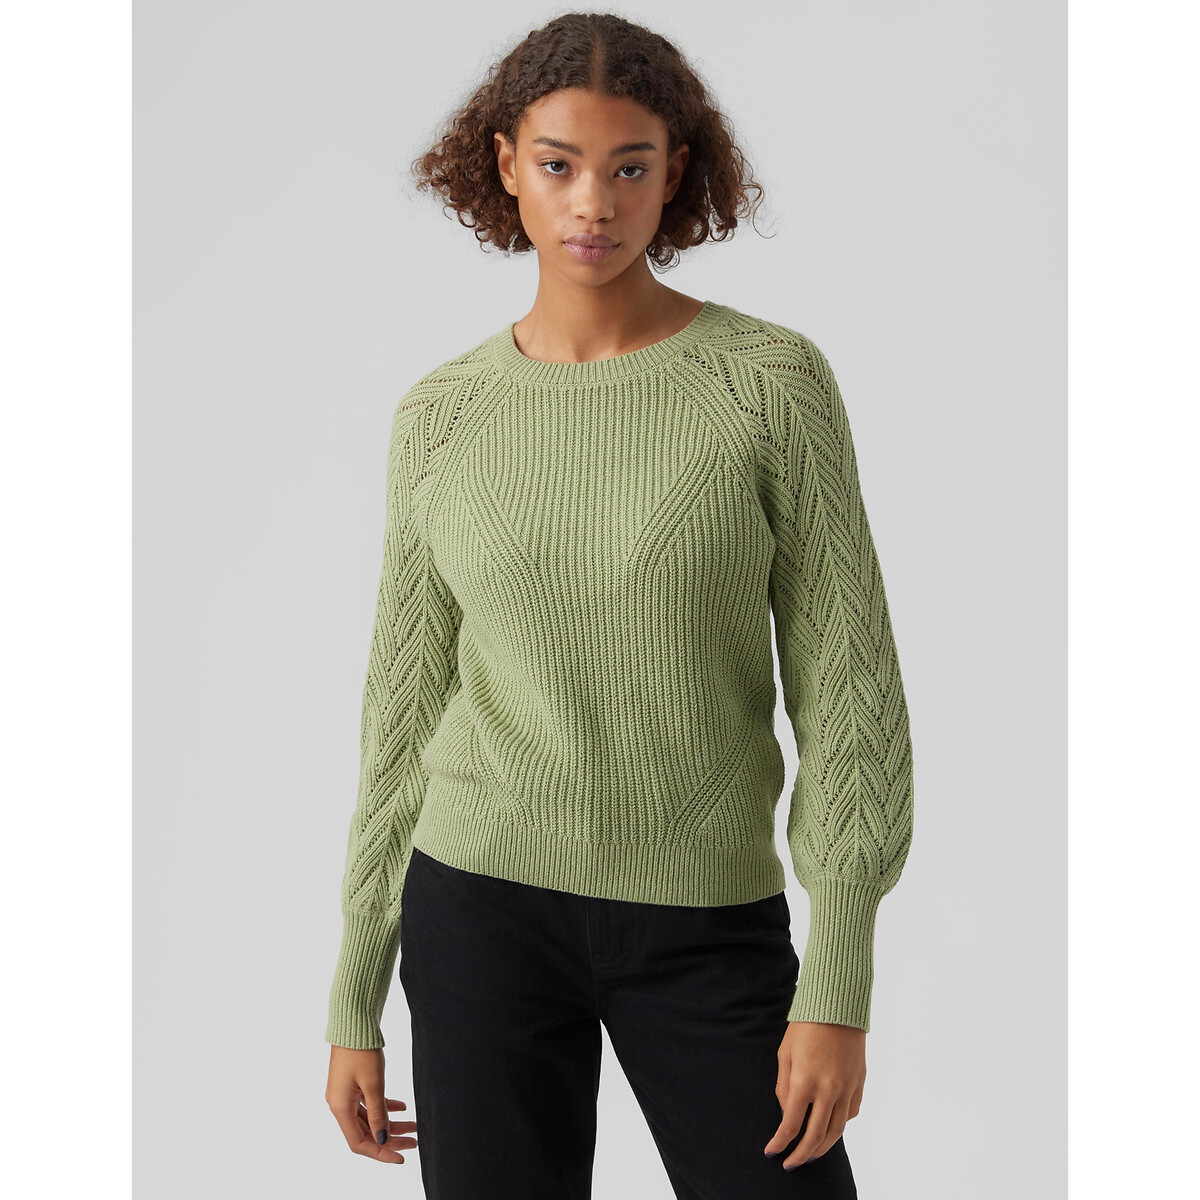 Пуловер С круглым вырезом рукава из ажурного трикотажа XS зеленый LaRedoute, размер XS - фото 2